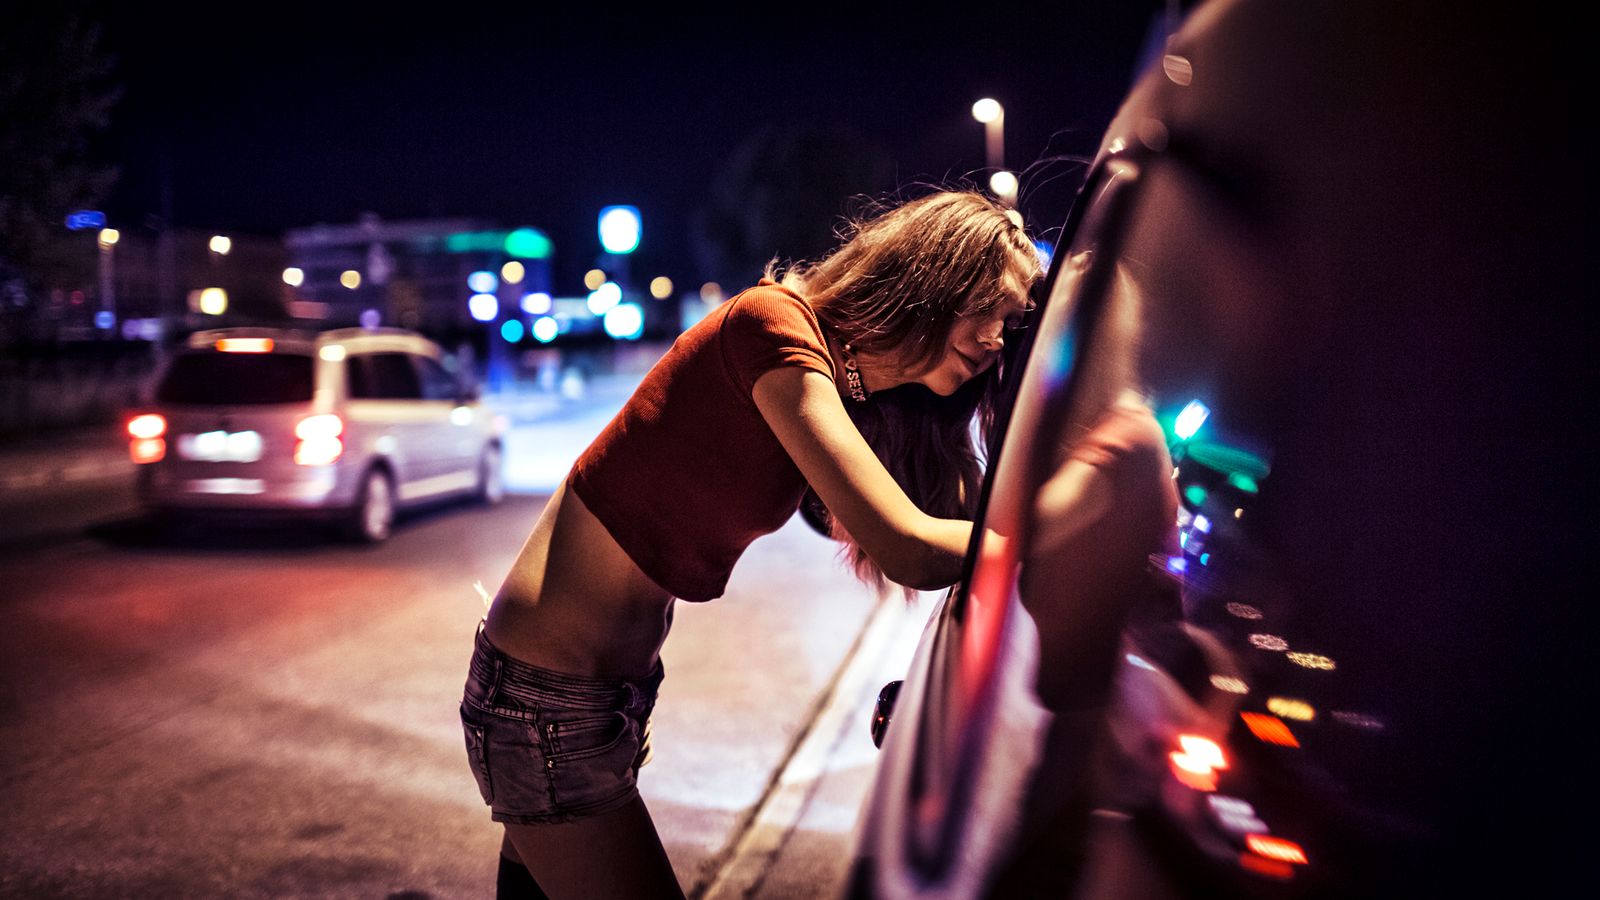  Prostitutes in Vancouver, Canada